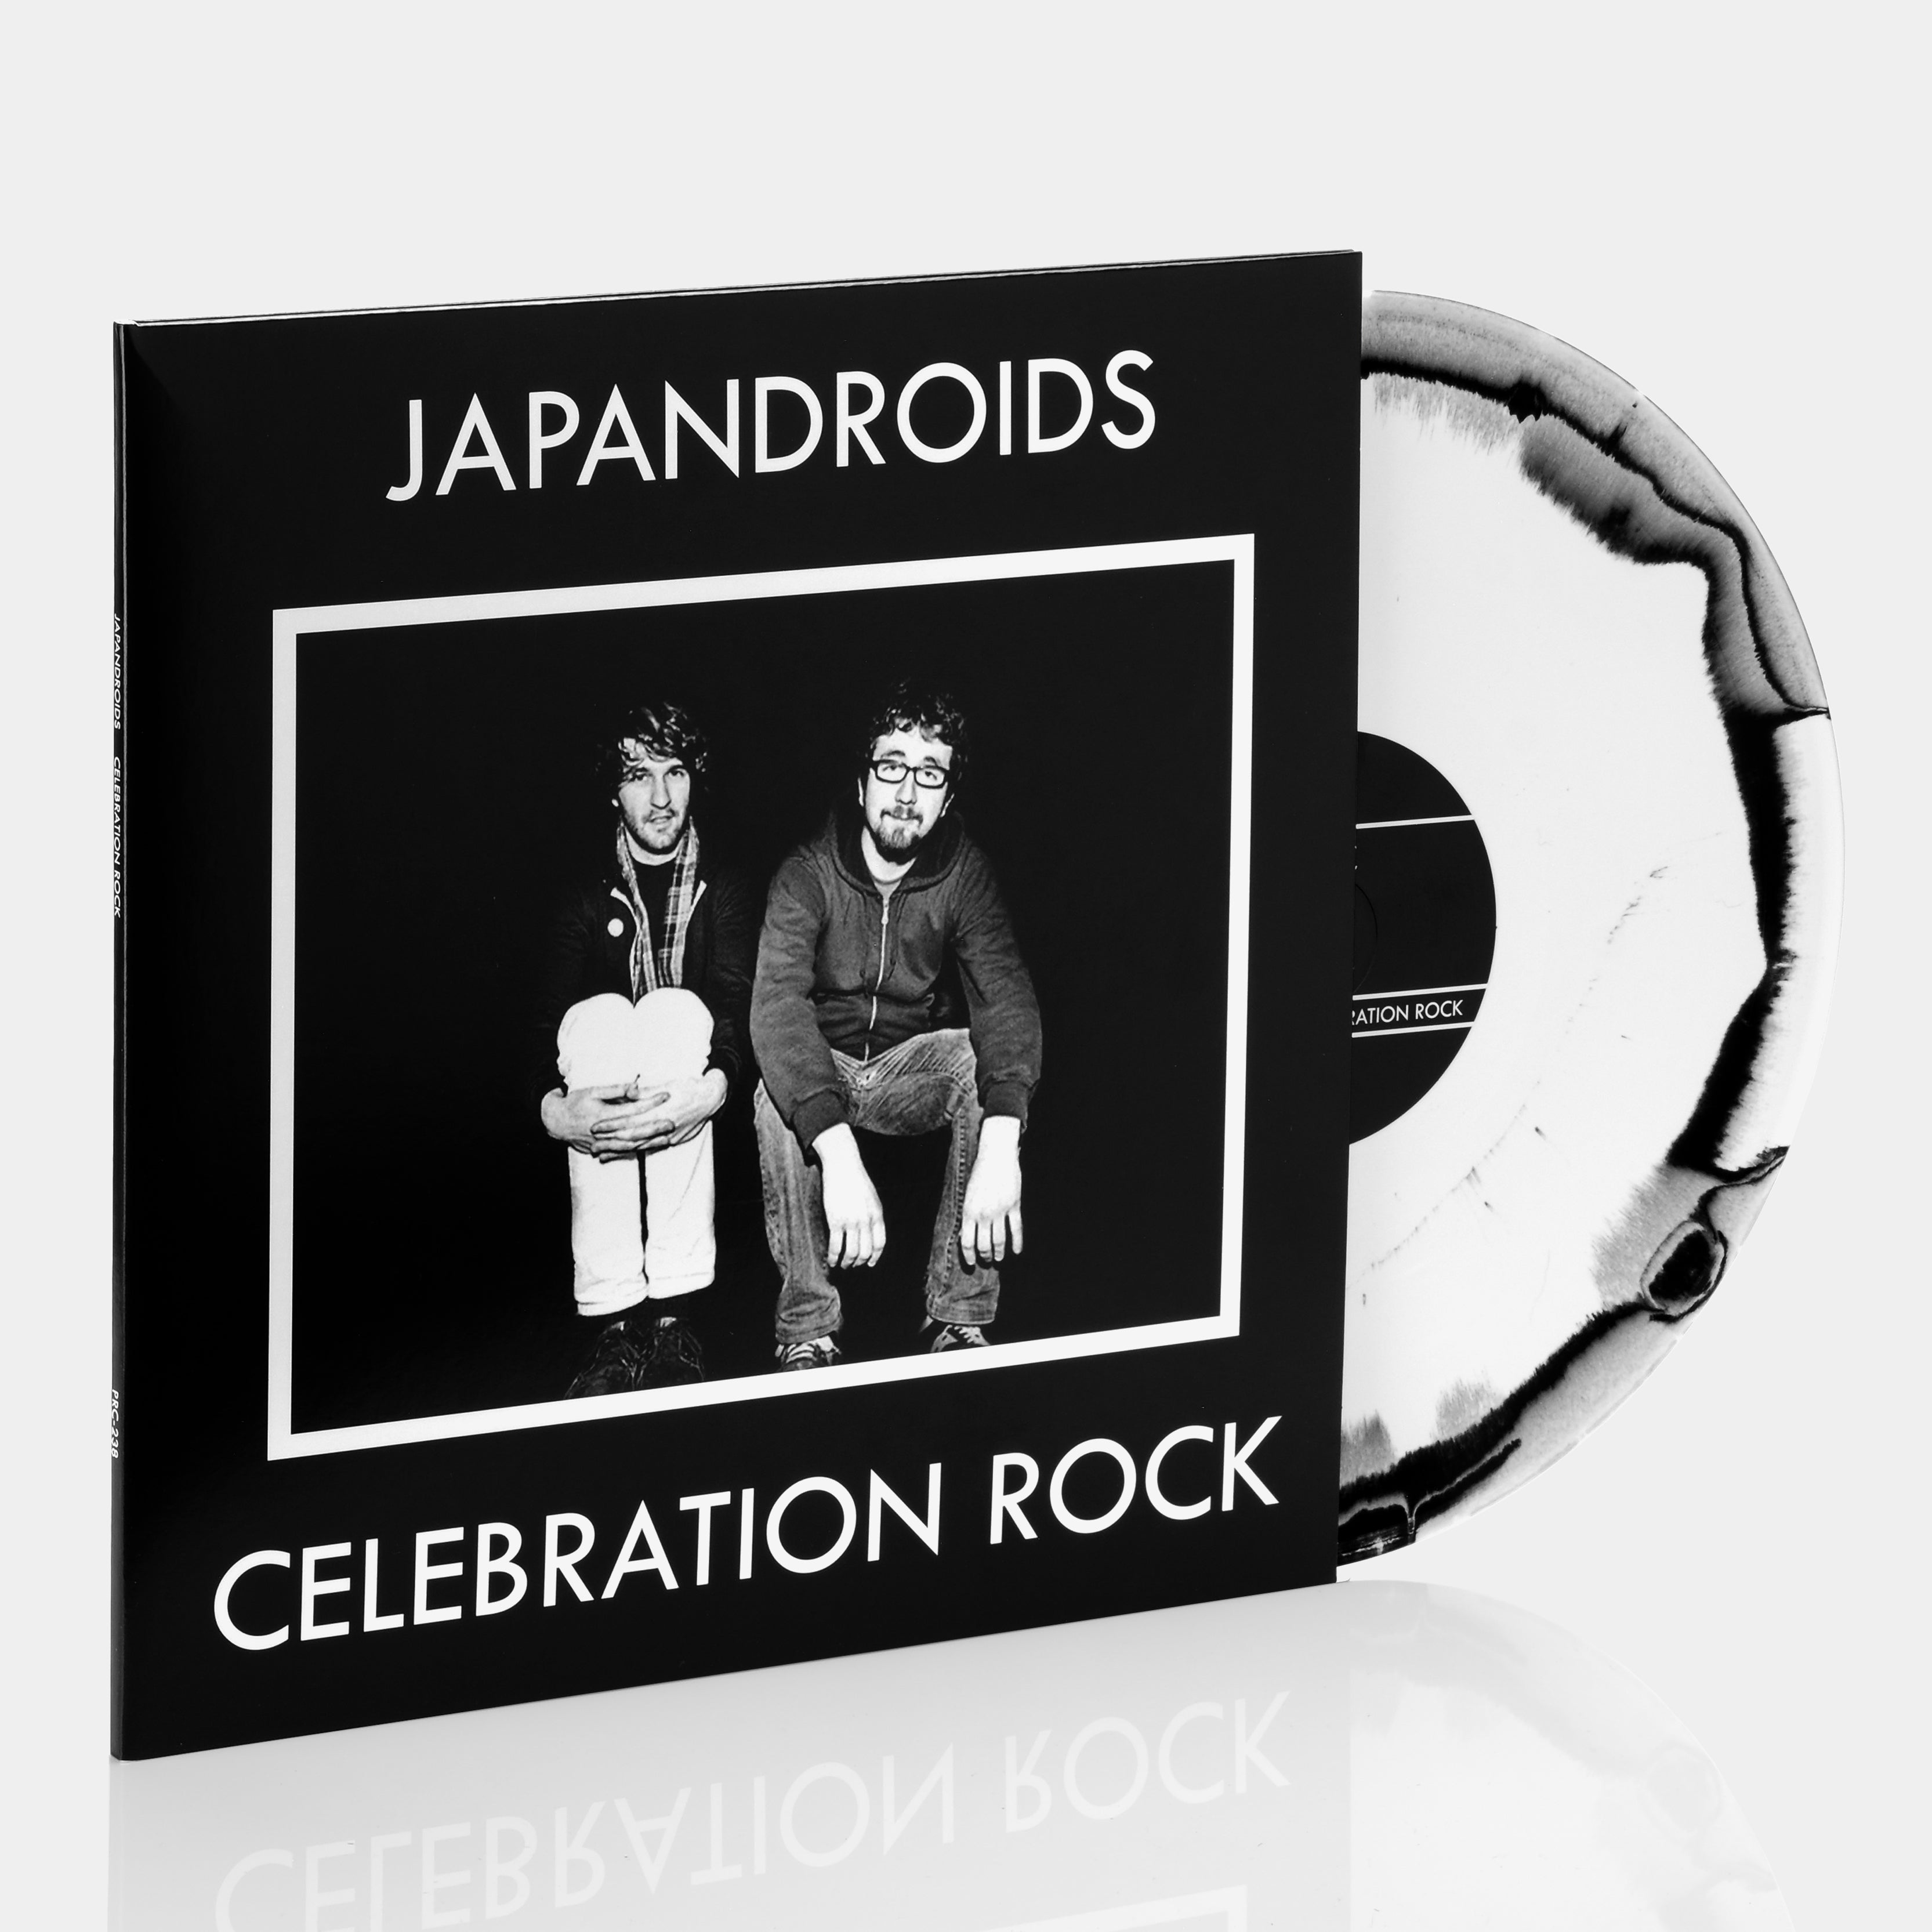 Japandroids - Celebration Rock LP Black And White Mix Vinyl Record